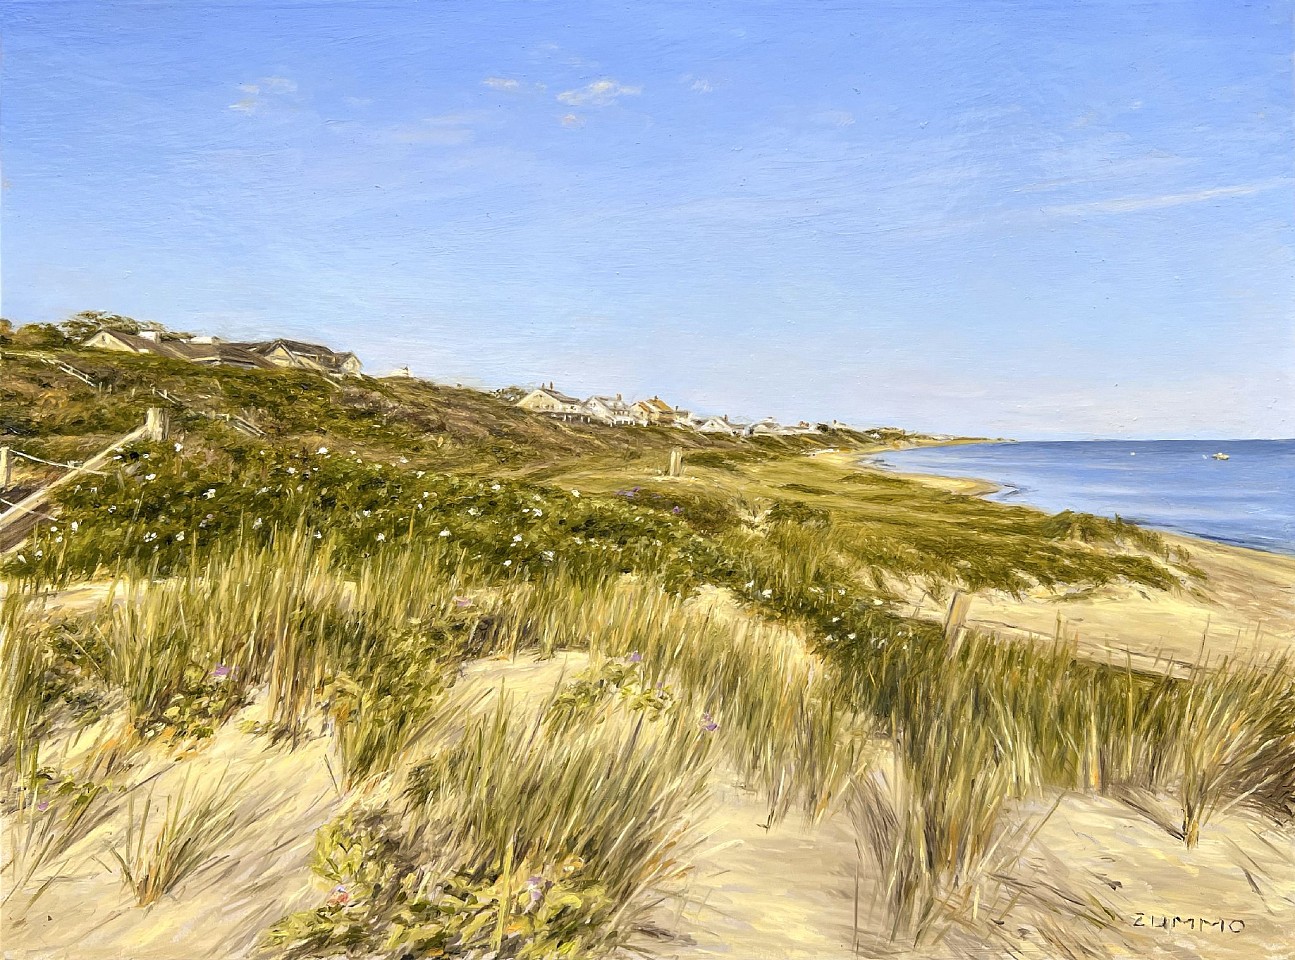 Lori Zummo, Steps Beach Skyline, 2023
oil on canvas, 9 x 12 in. (22.9 x 30.5 cm)
LZ230504